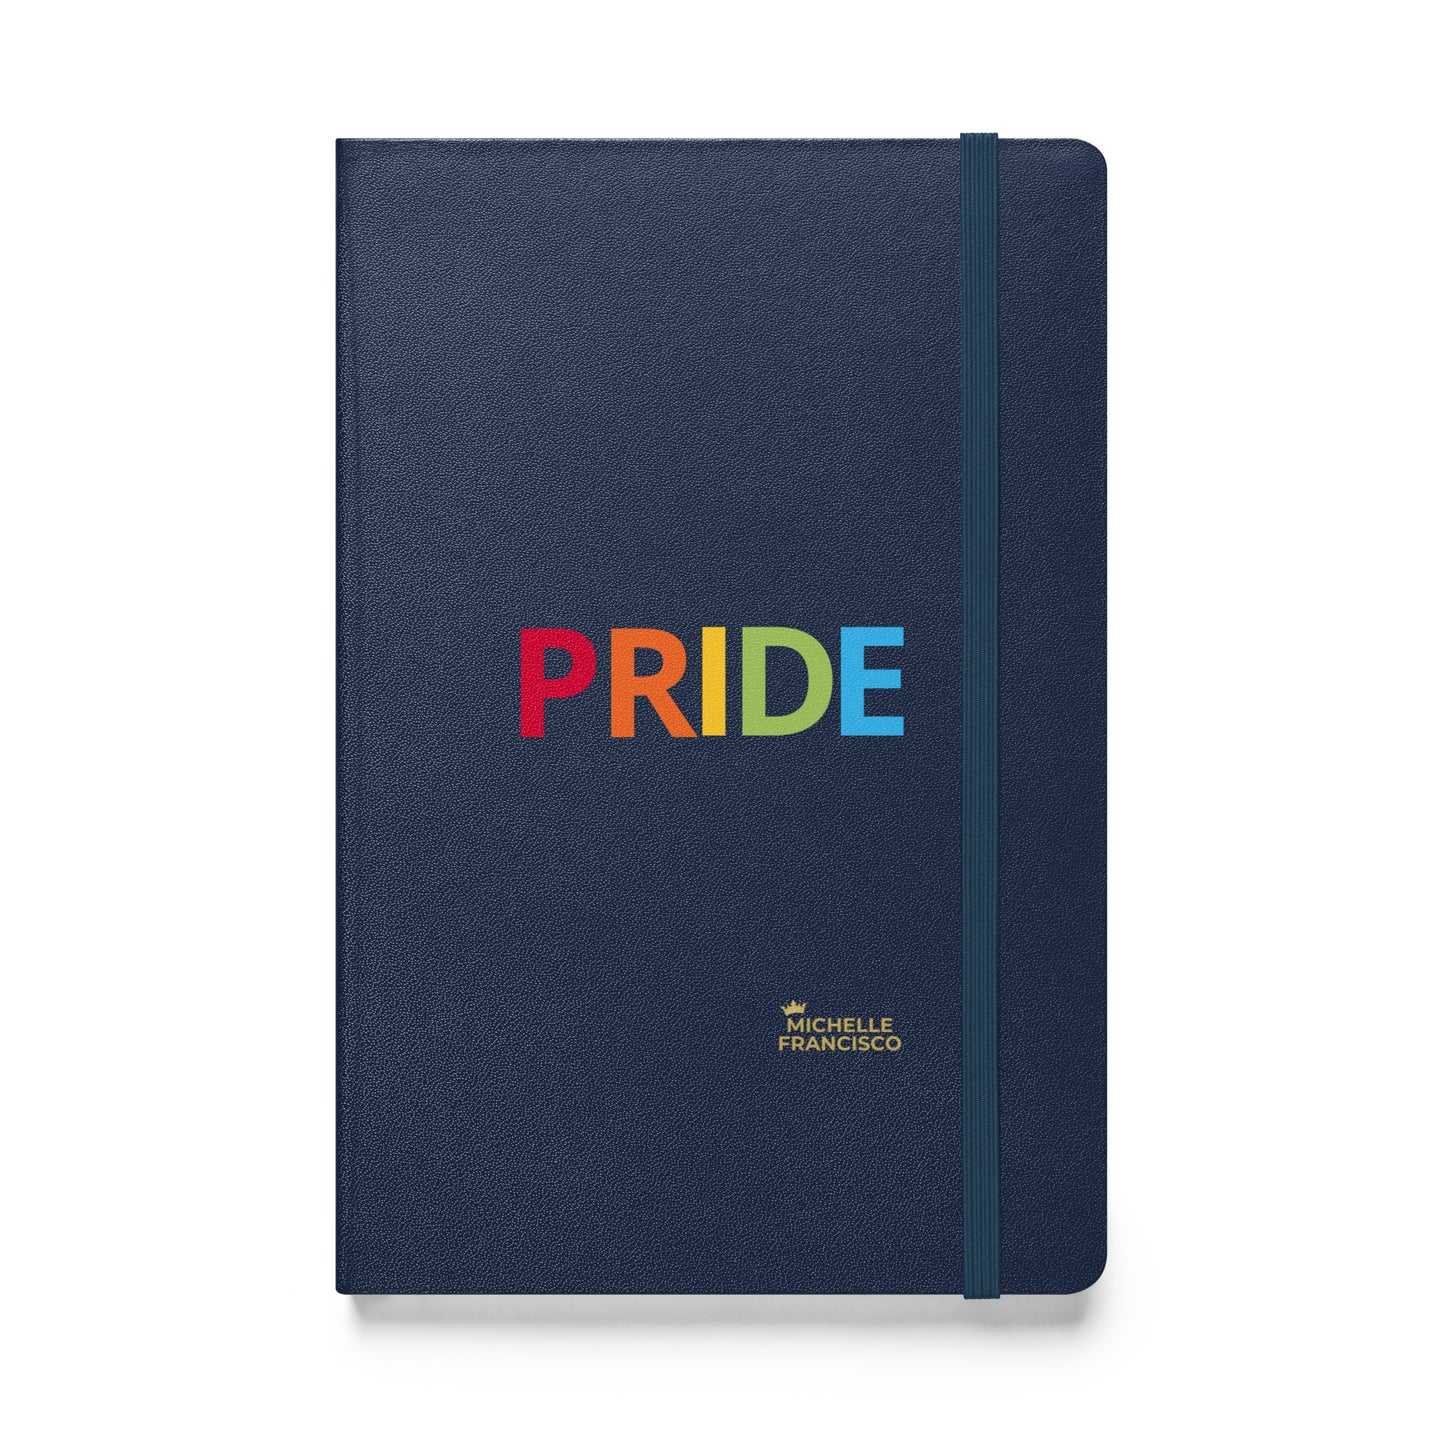 PRIDE Hardcover Bound Notebook